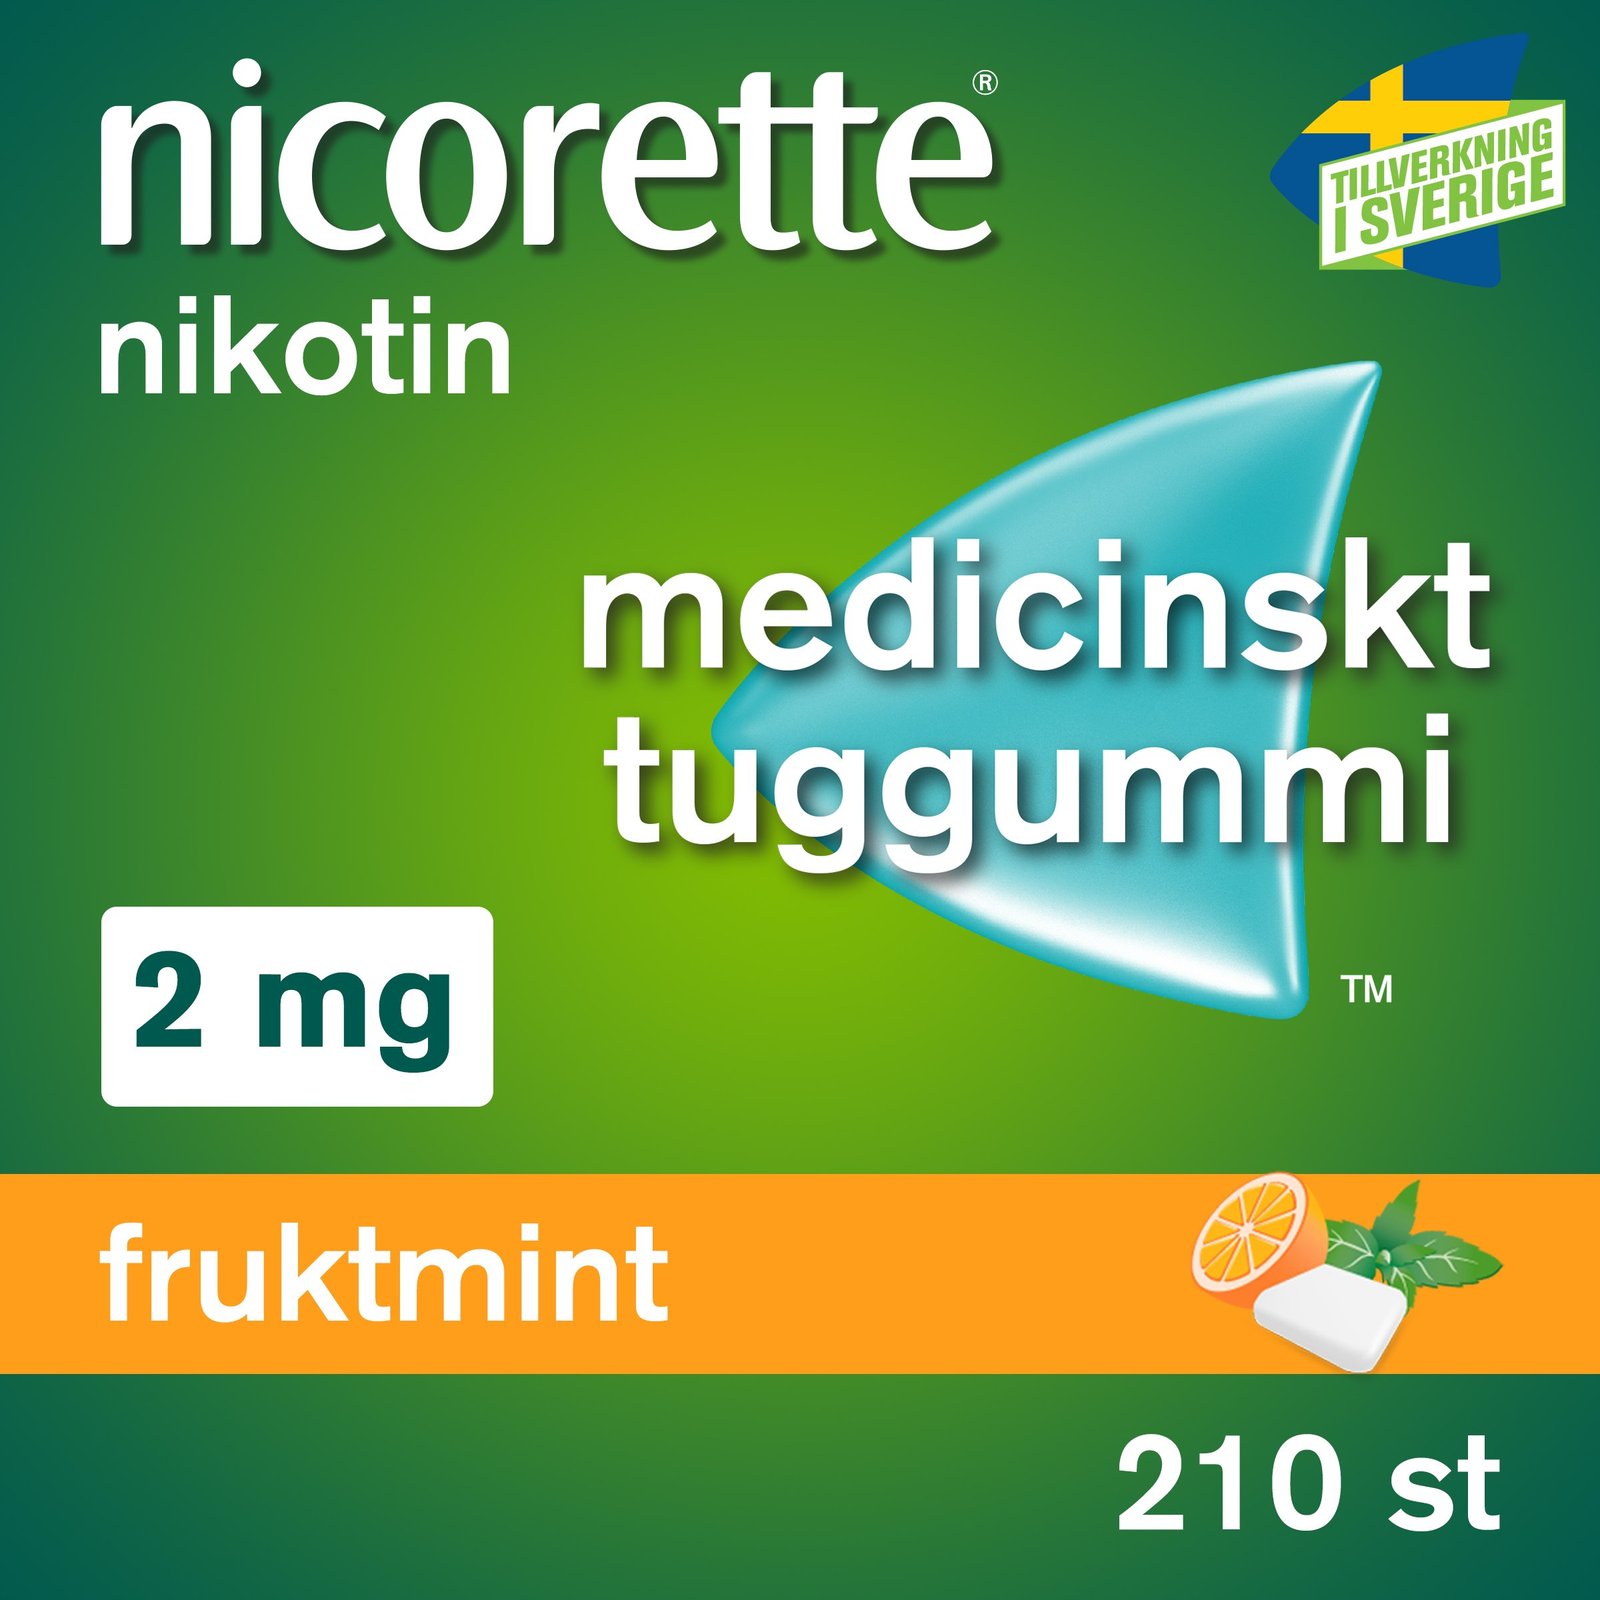 Nicorette Fruktmint Medicinskt Tuggummi 2 mg 210 st